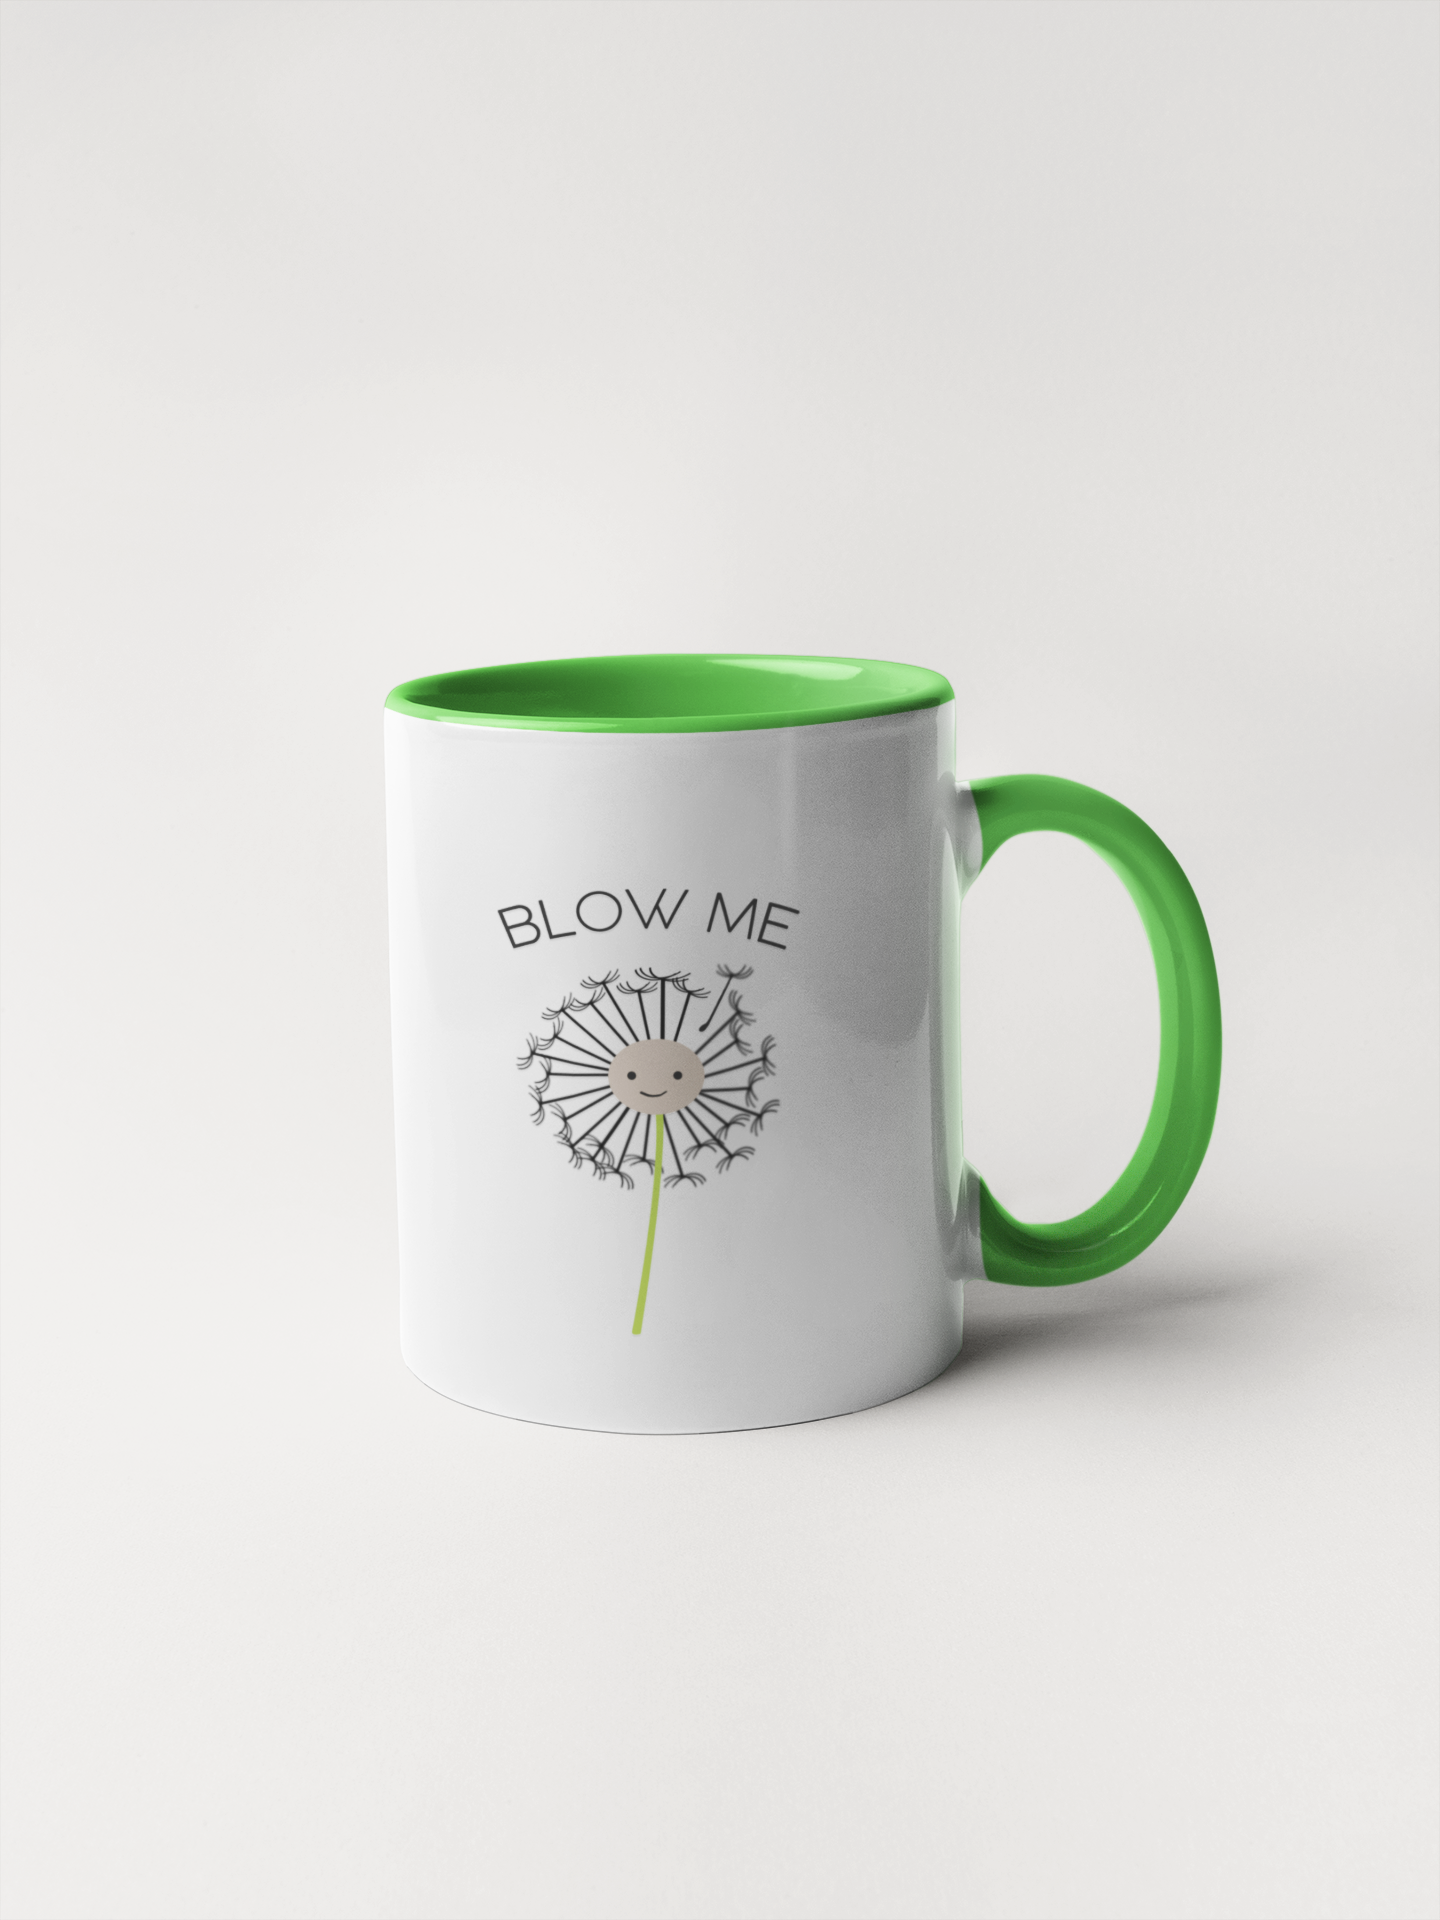 Calm Down Caren - Blow Me - Blowing Dandelion Coffee Mug